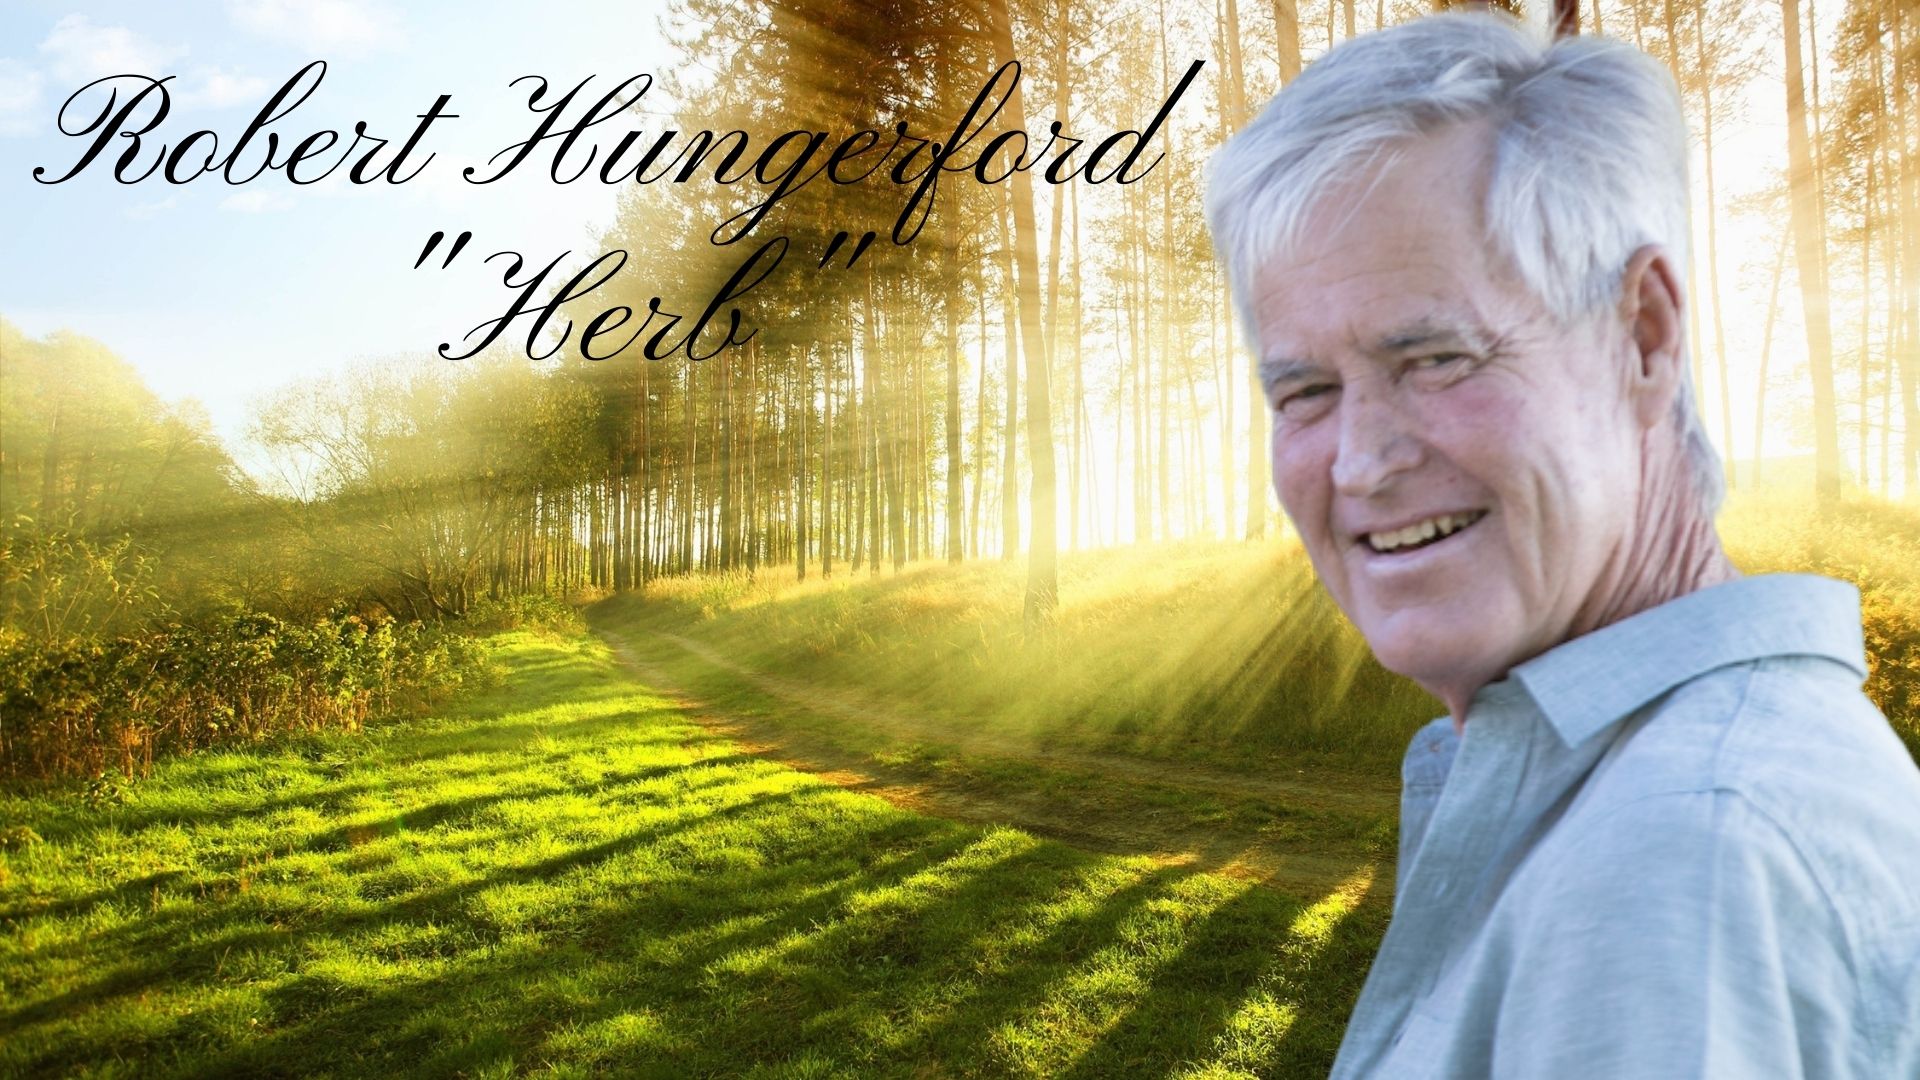 Robert Hungerford "Herb"